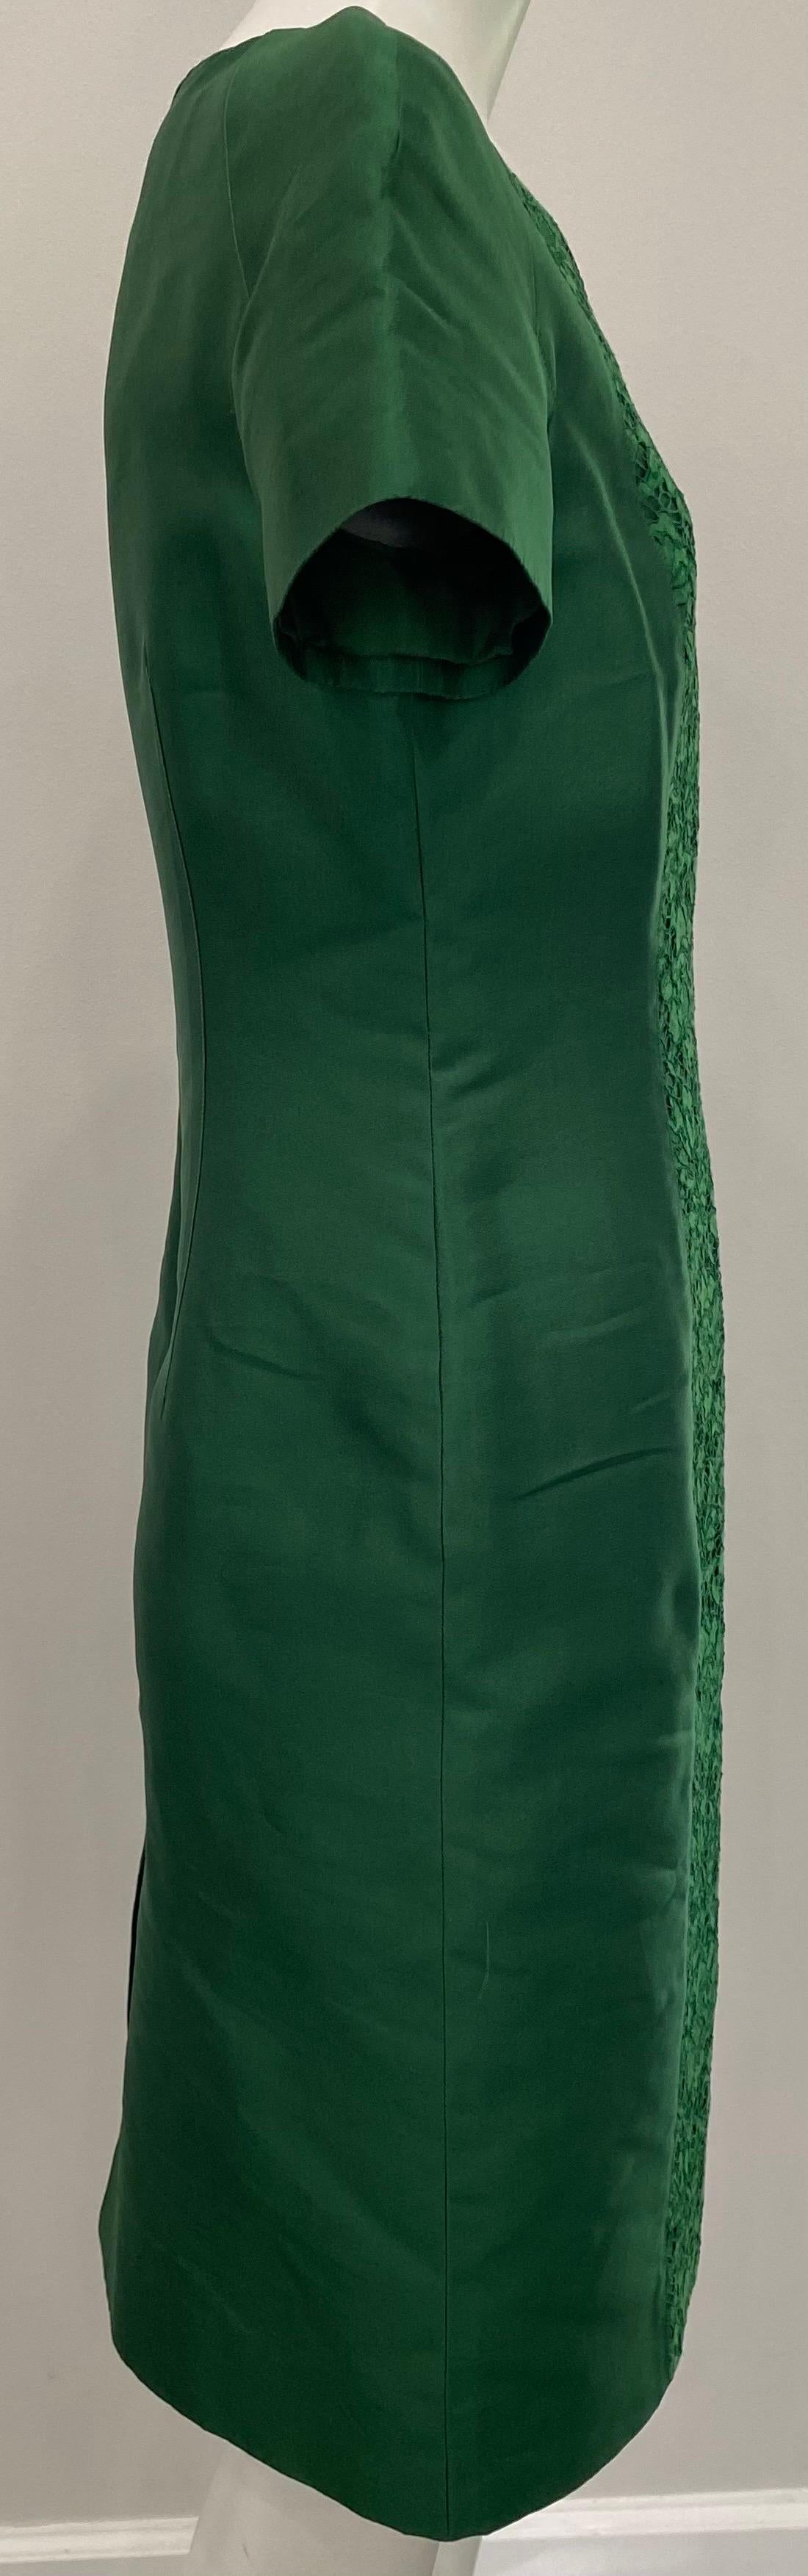 emerald sheath dress